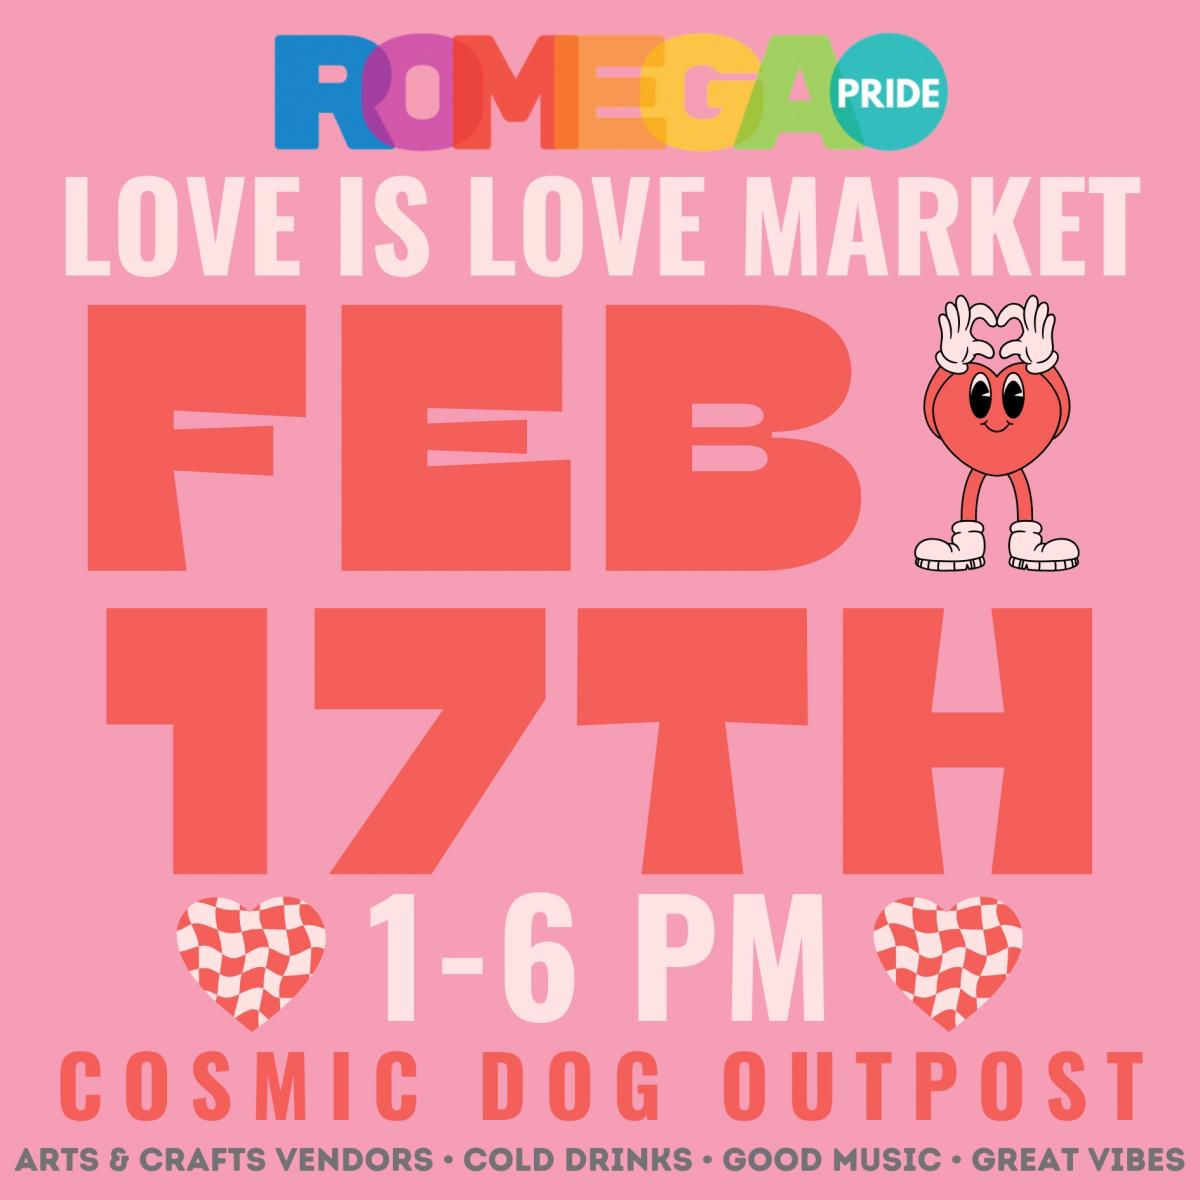 Rome Pride's LOVE IS LOVE Market